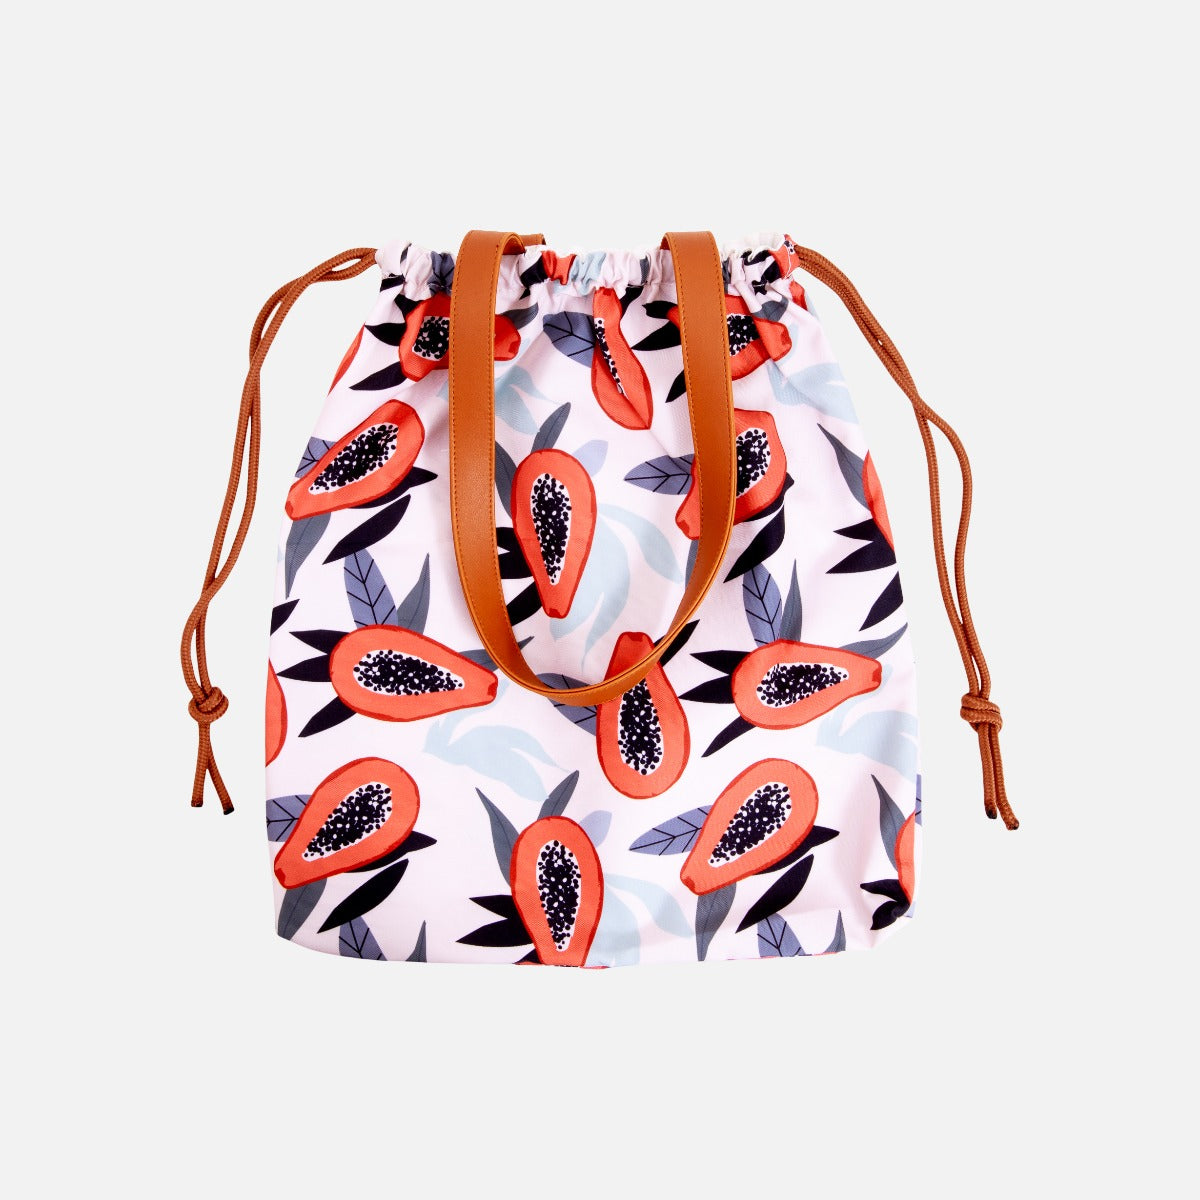 Beige drawstring canvas beach bag with papayas print